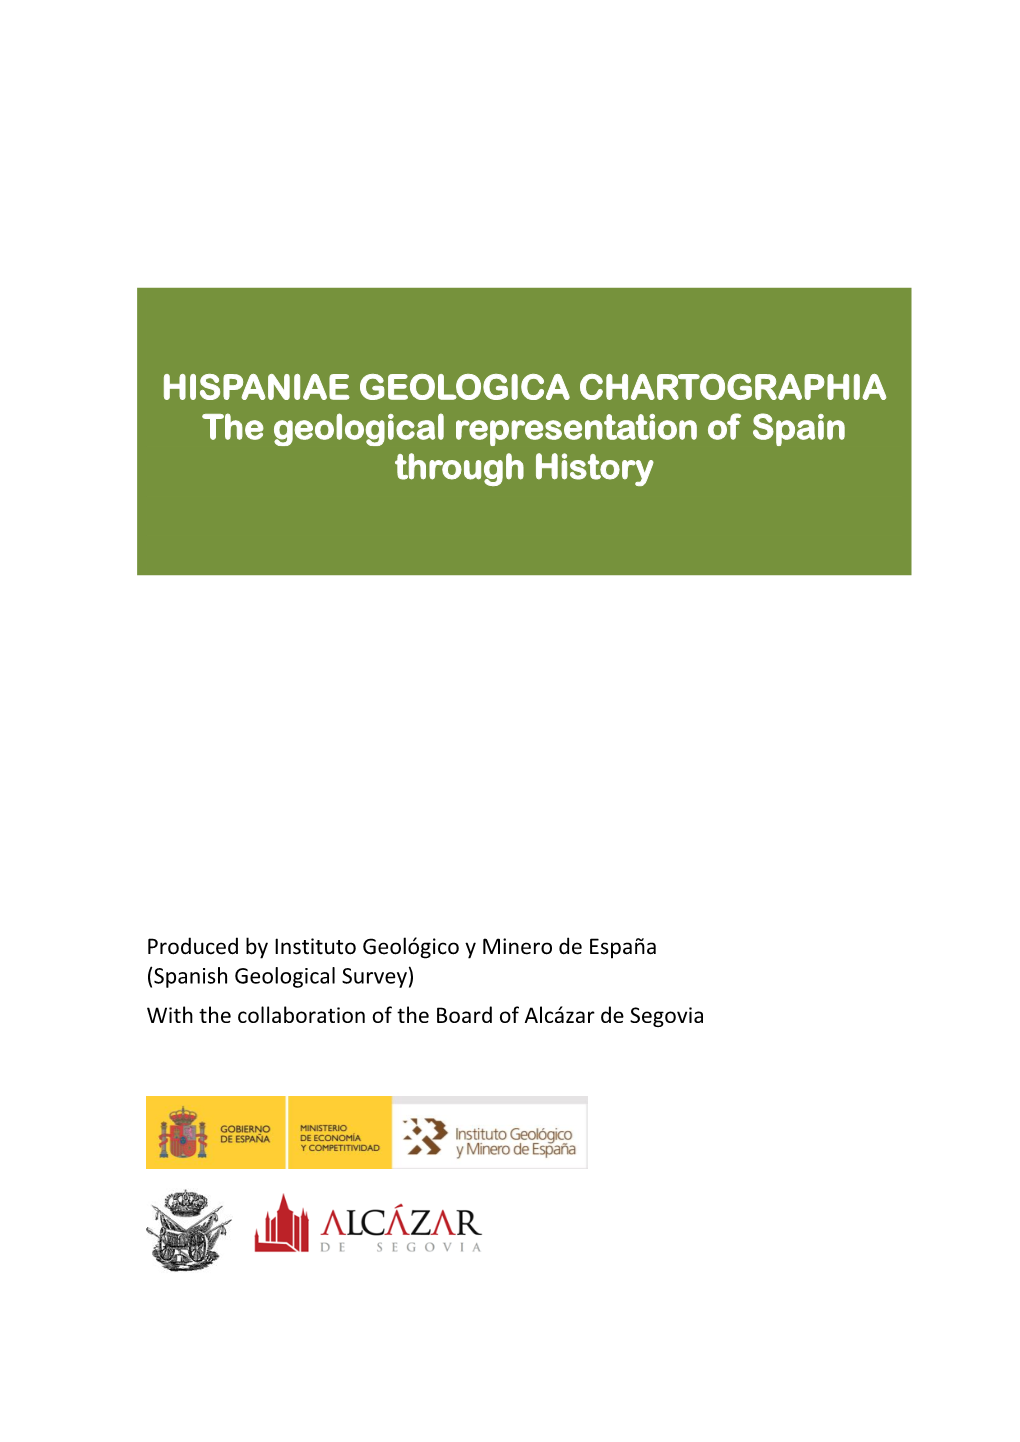 HISPANIAE GEOLOGICA CHARTOGRAPHIA the Geological Representation of Spain Through History